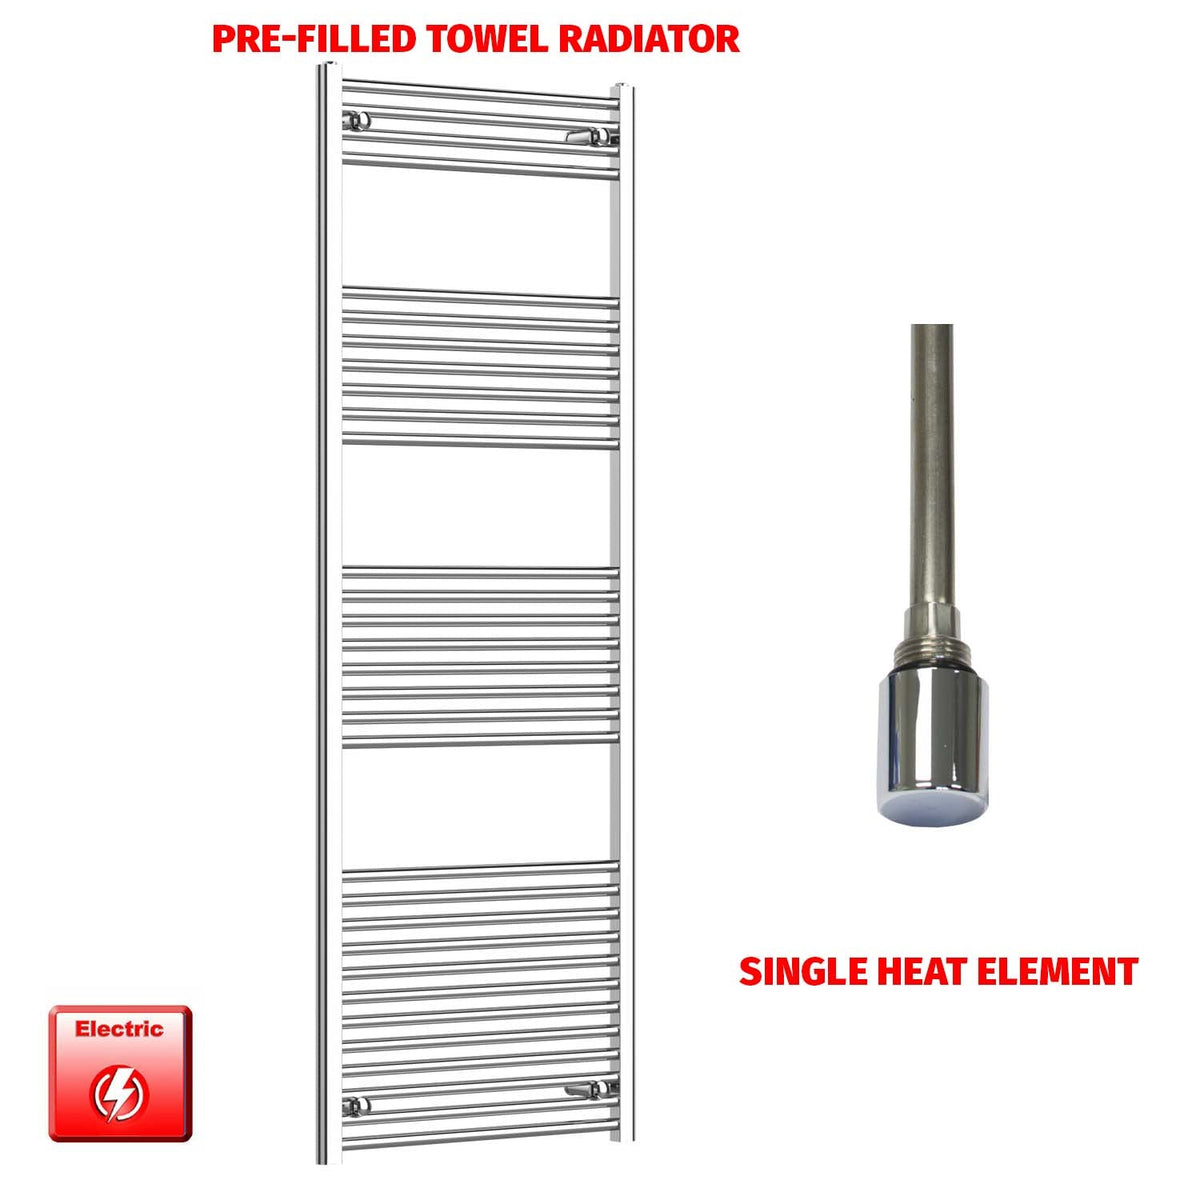 1800 x 600 Chrome Electric Heated Towel Radiator Pre-Filled